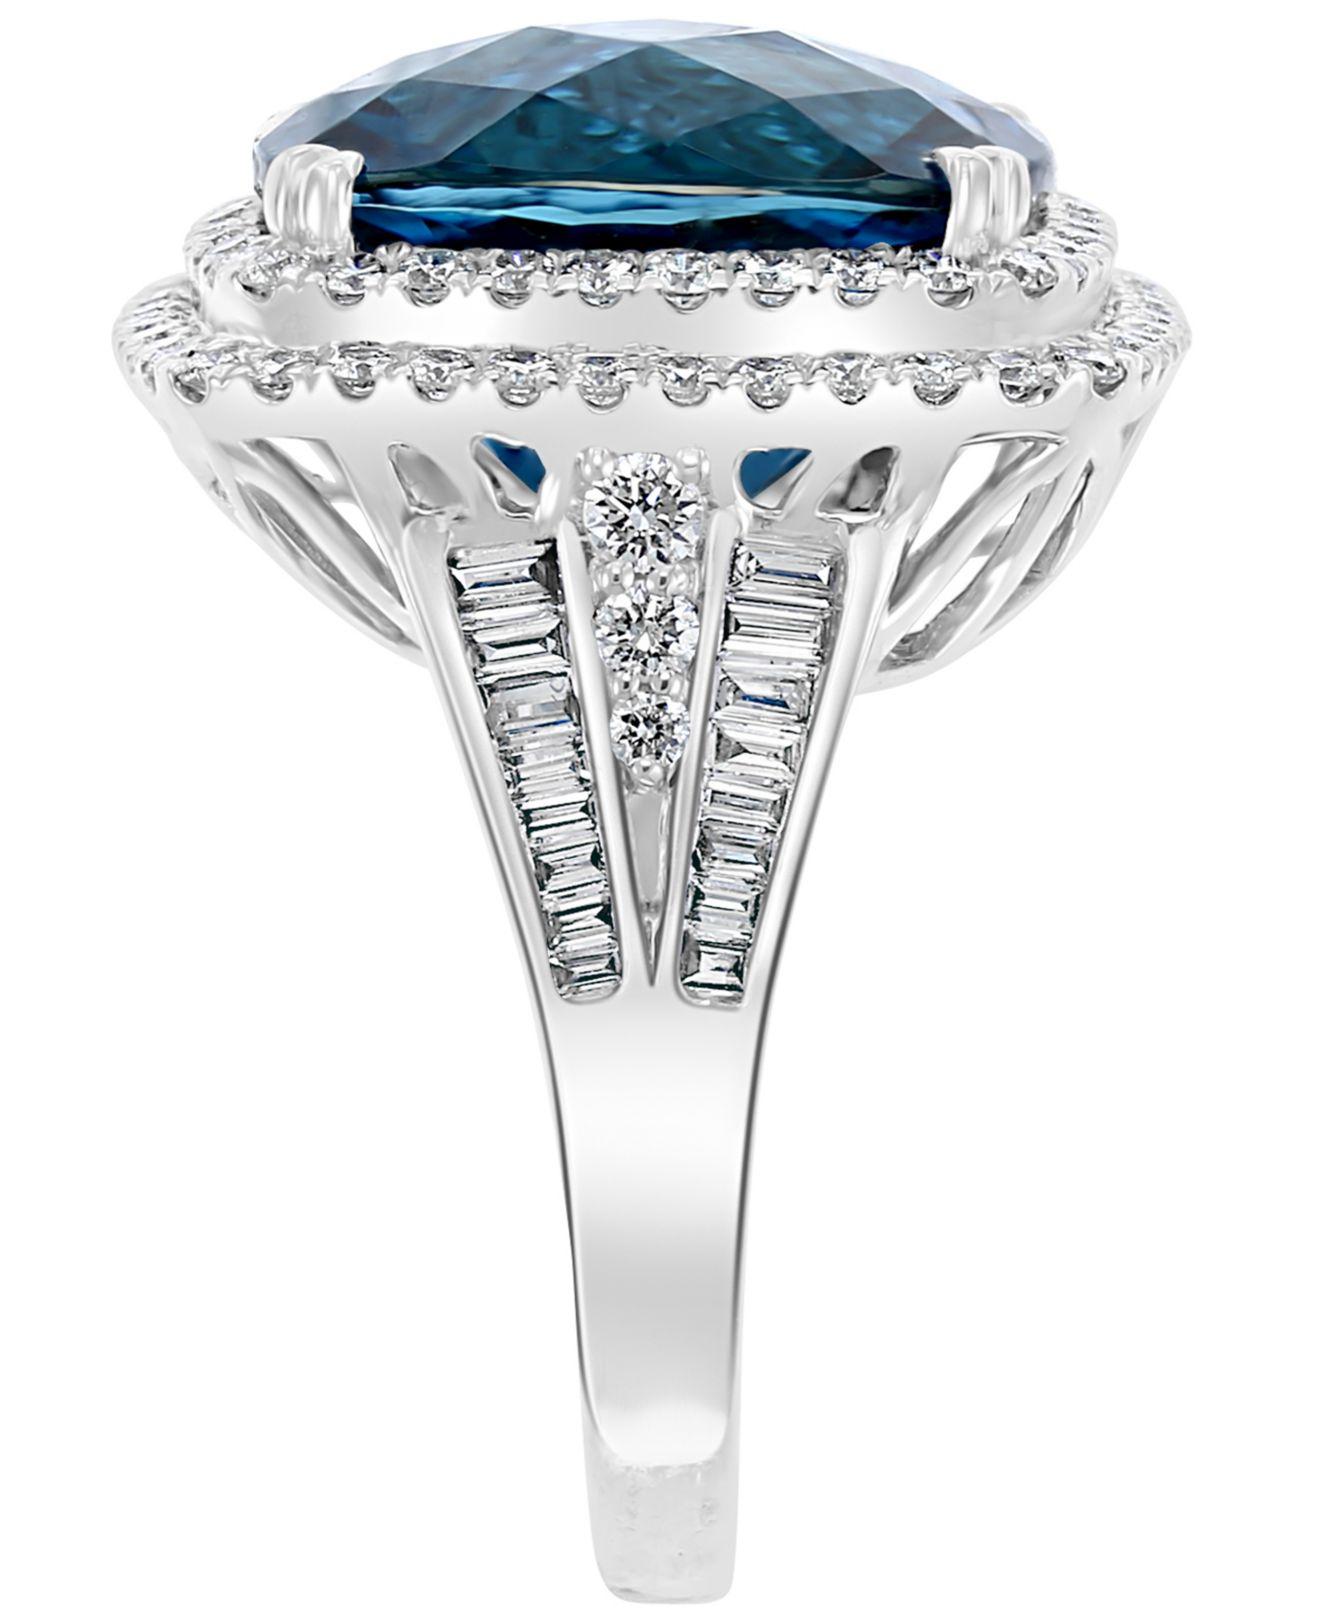 efffy efffy エフィー レディース リング アクセサリー EFFYreg; London Blue Topaz (12-3/4 ct.   Diamond (1/5 ct. Ring in 14k White Gold